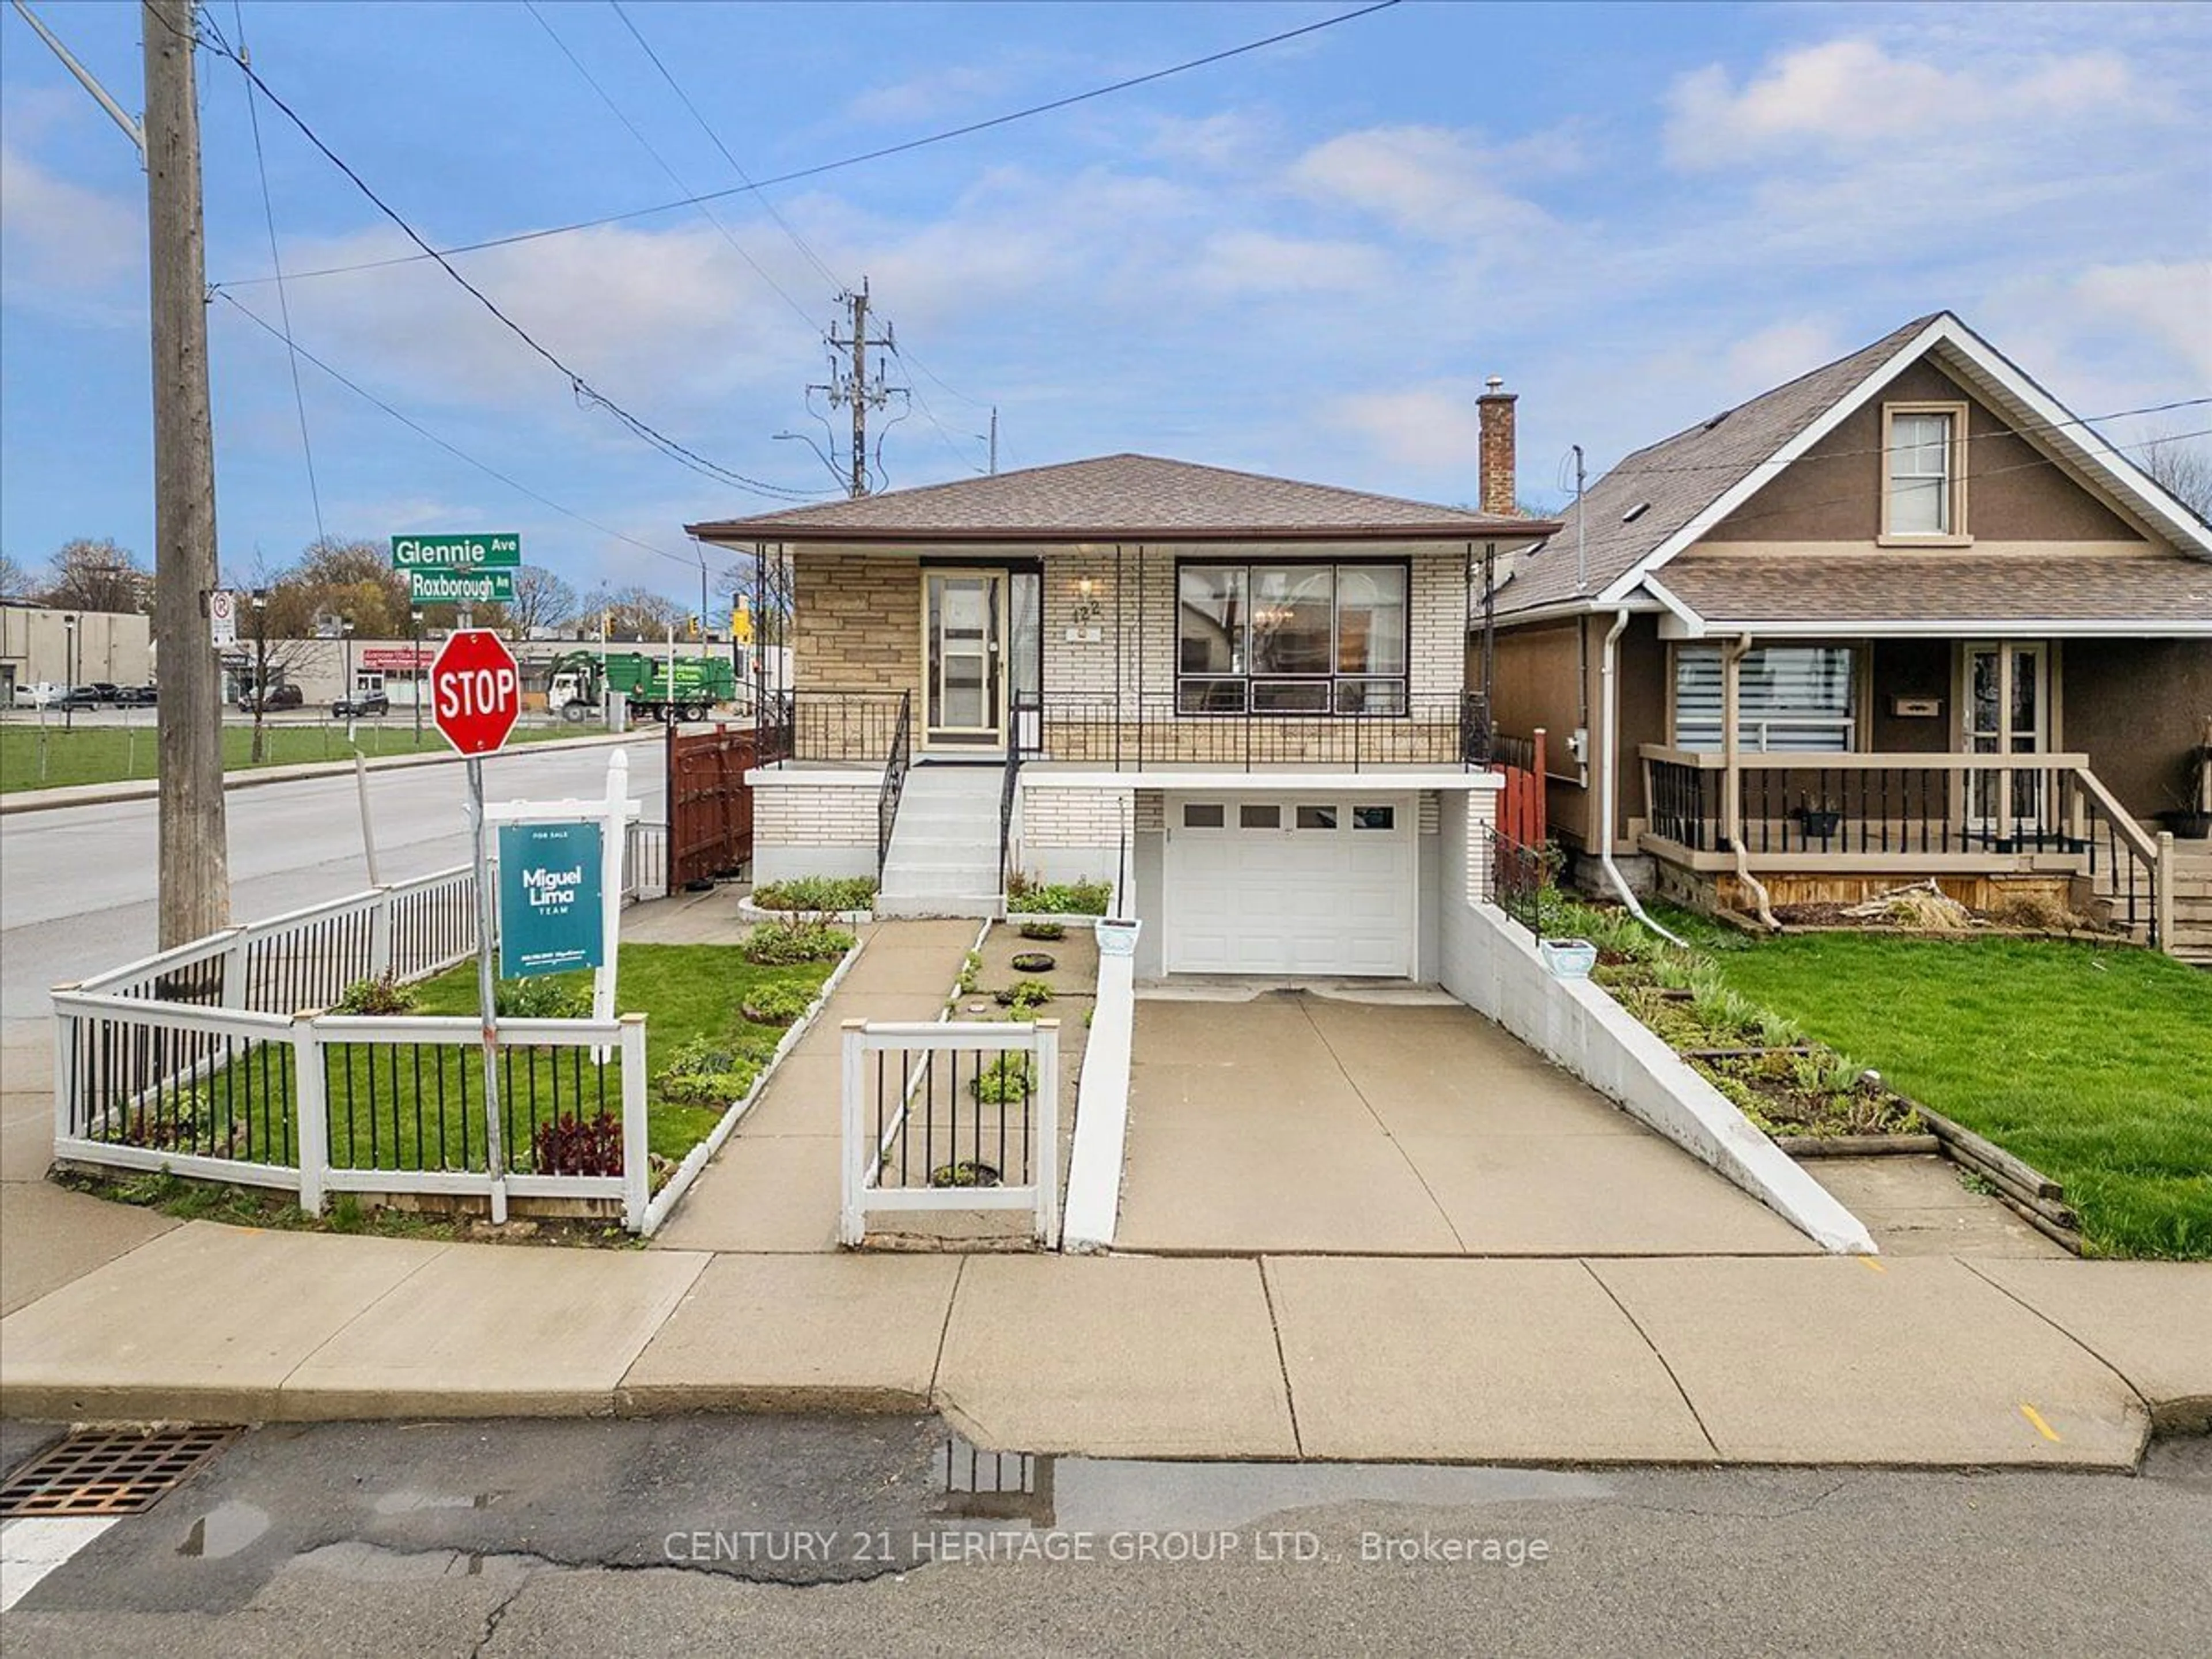 Frontside or backside of a home for 122 Glennie Ave, Hamilton Ontario L8H 5V9